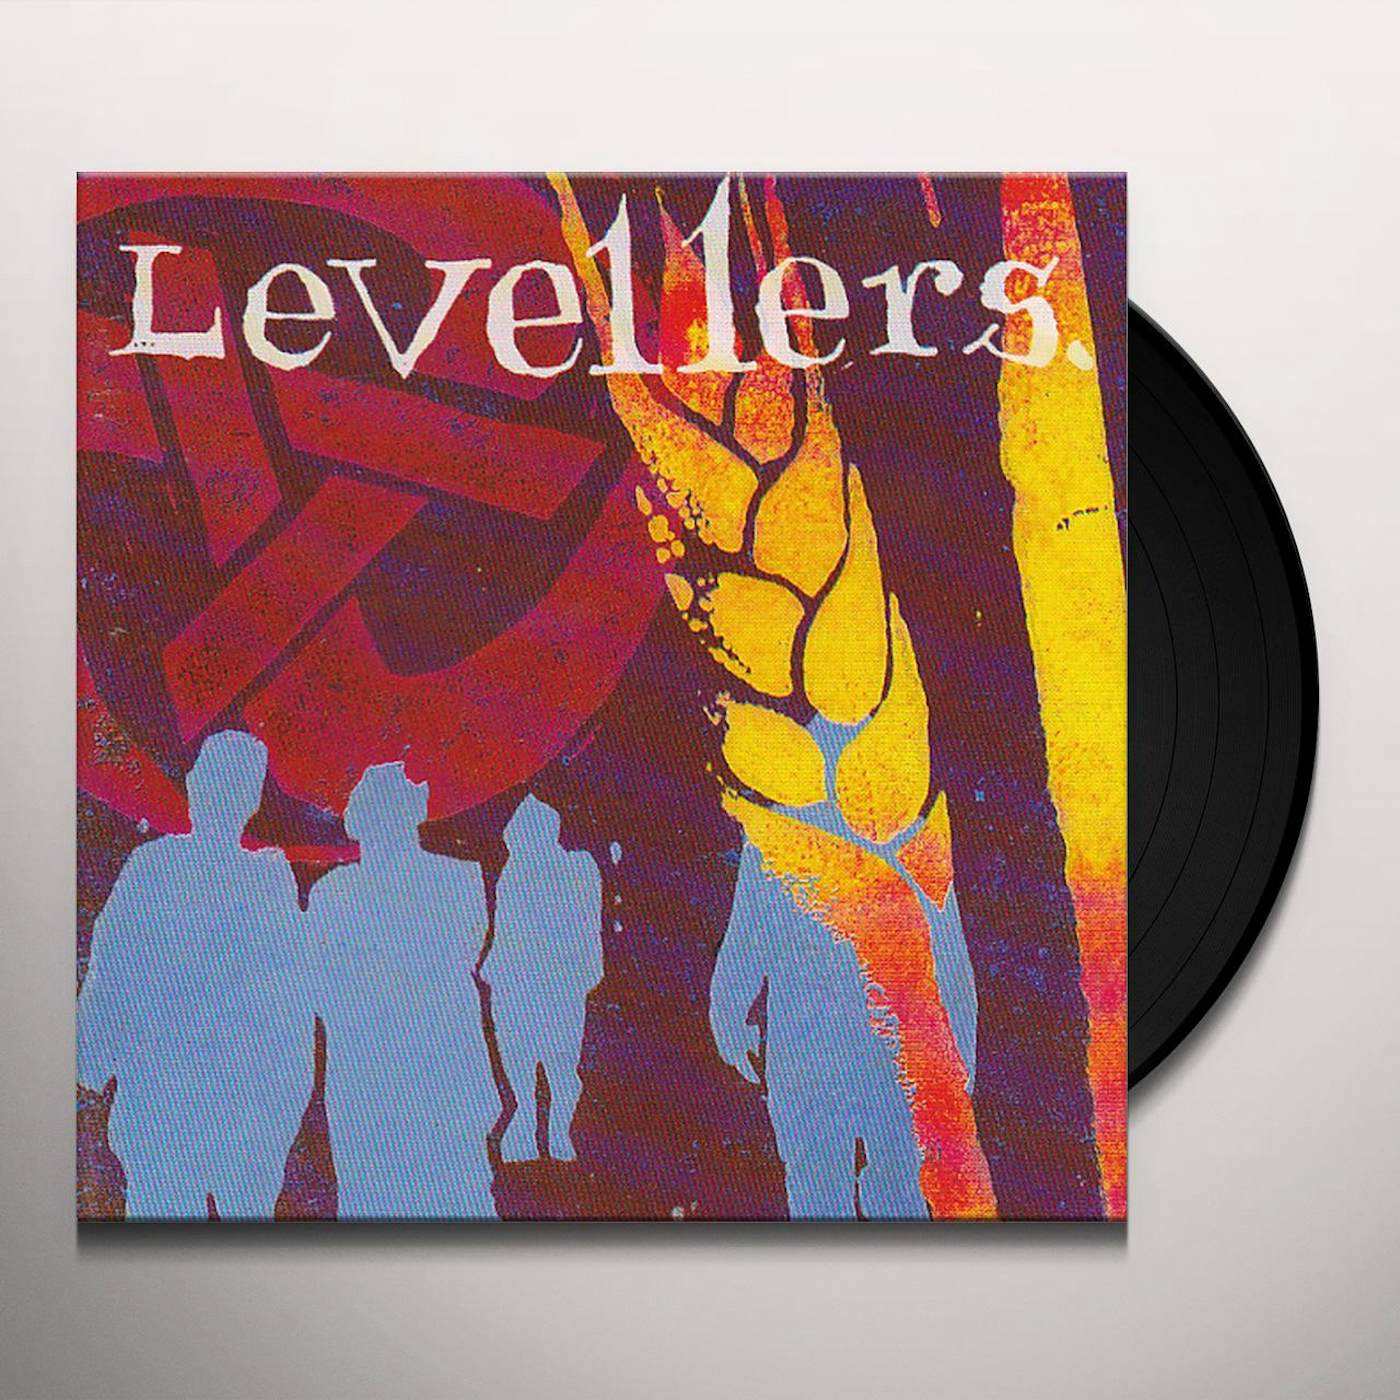 Levellers Vinyl Record